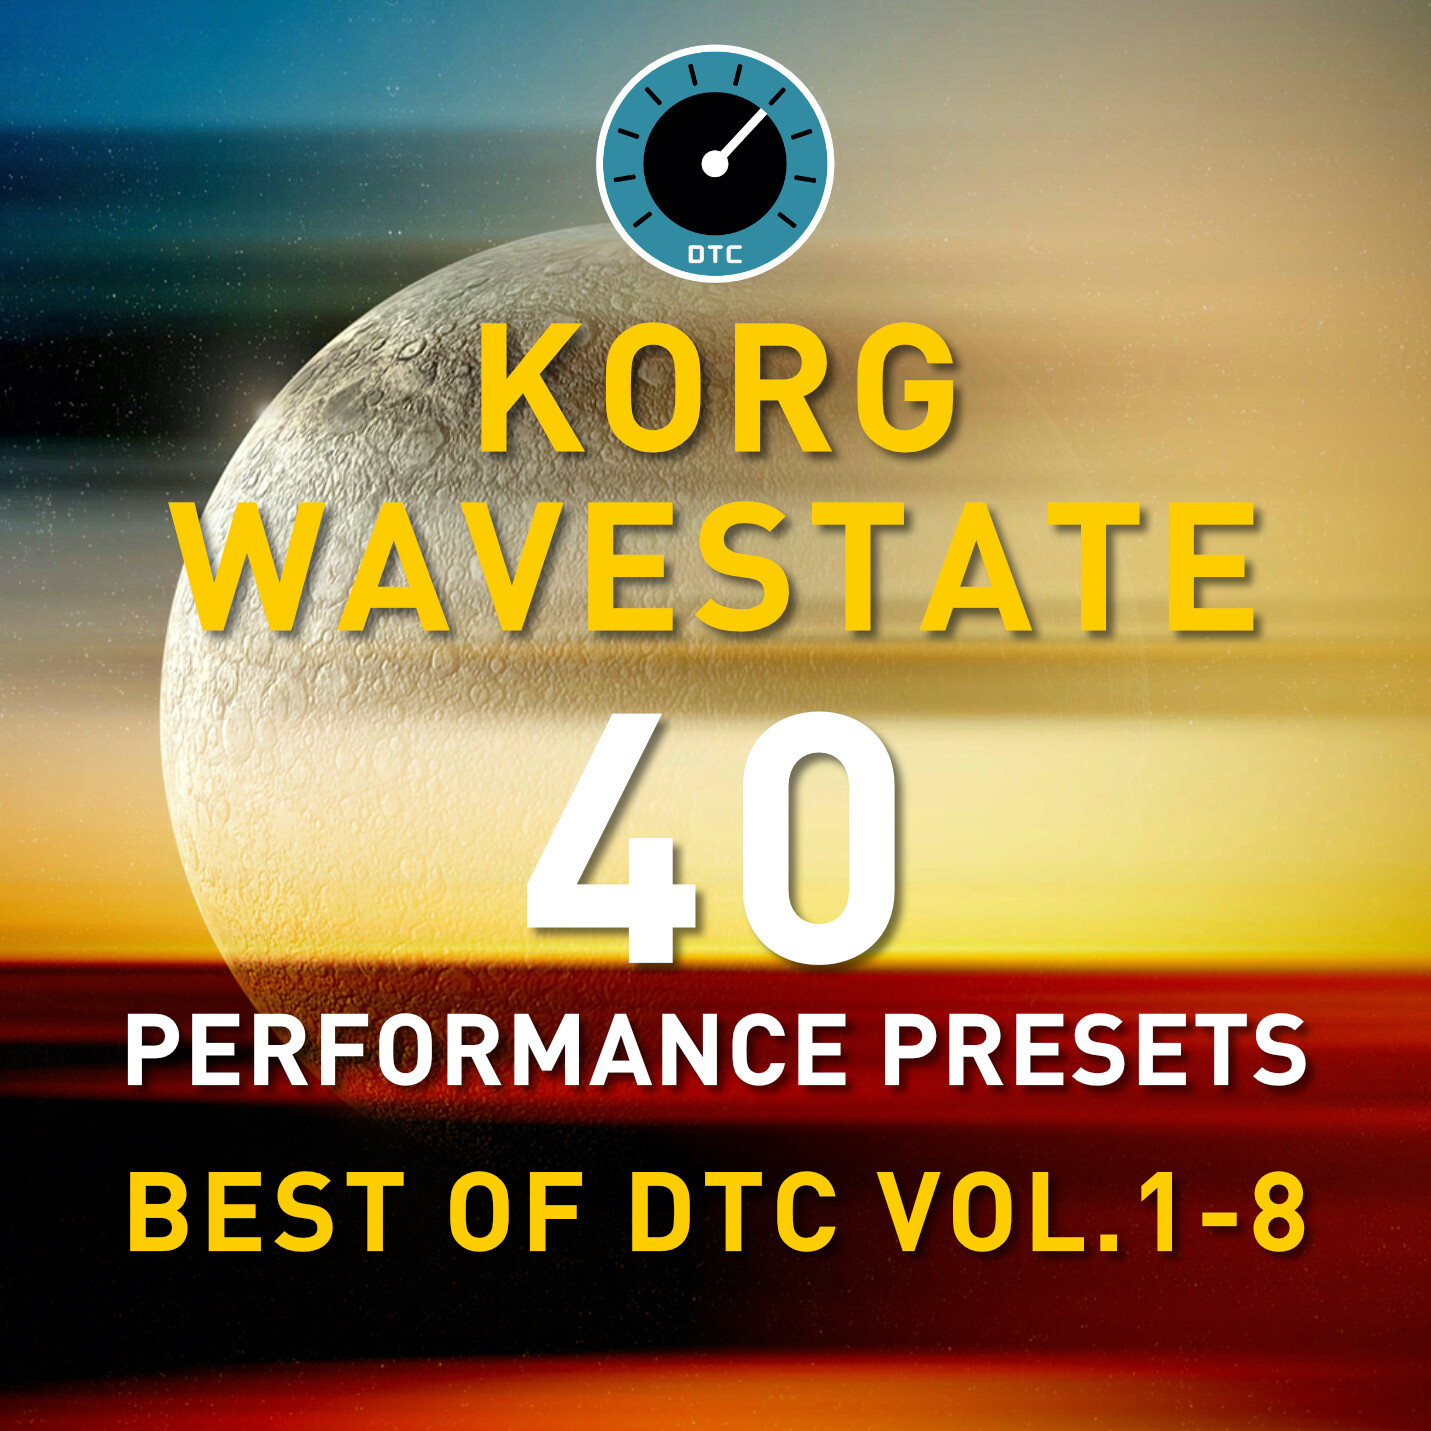 Korg Wavestate - DTC Best of Vol.1-8 - 40 Presets